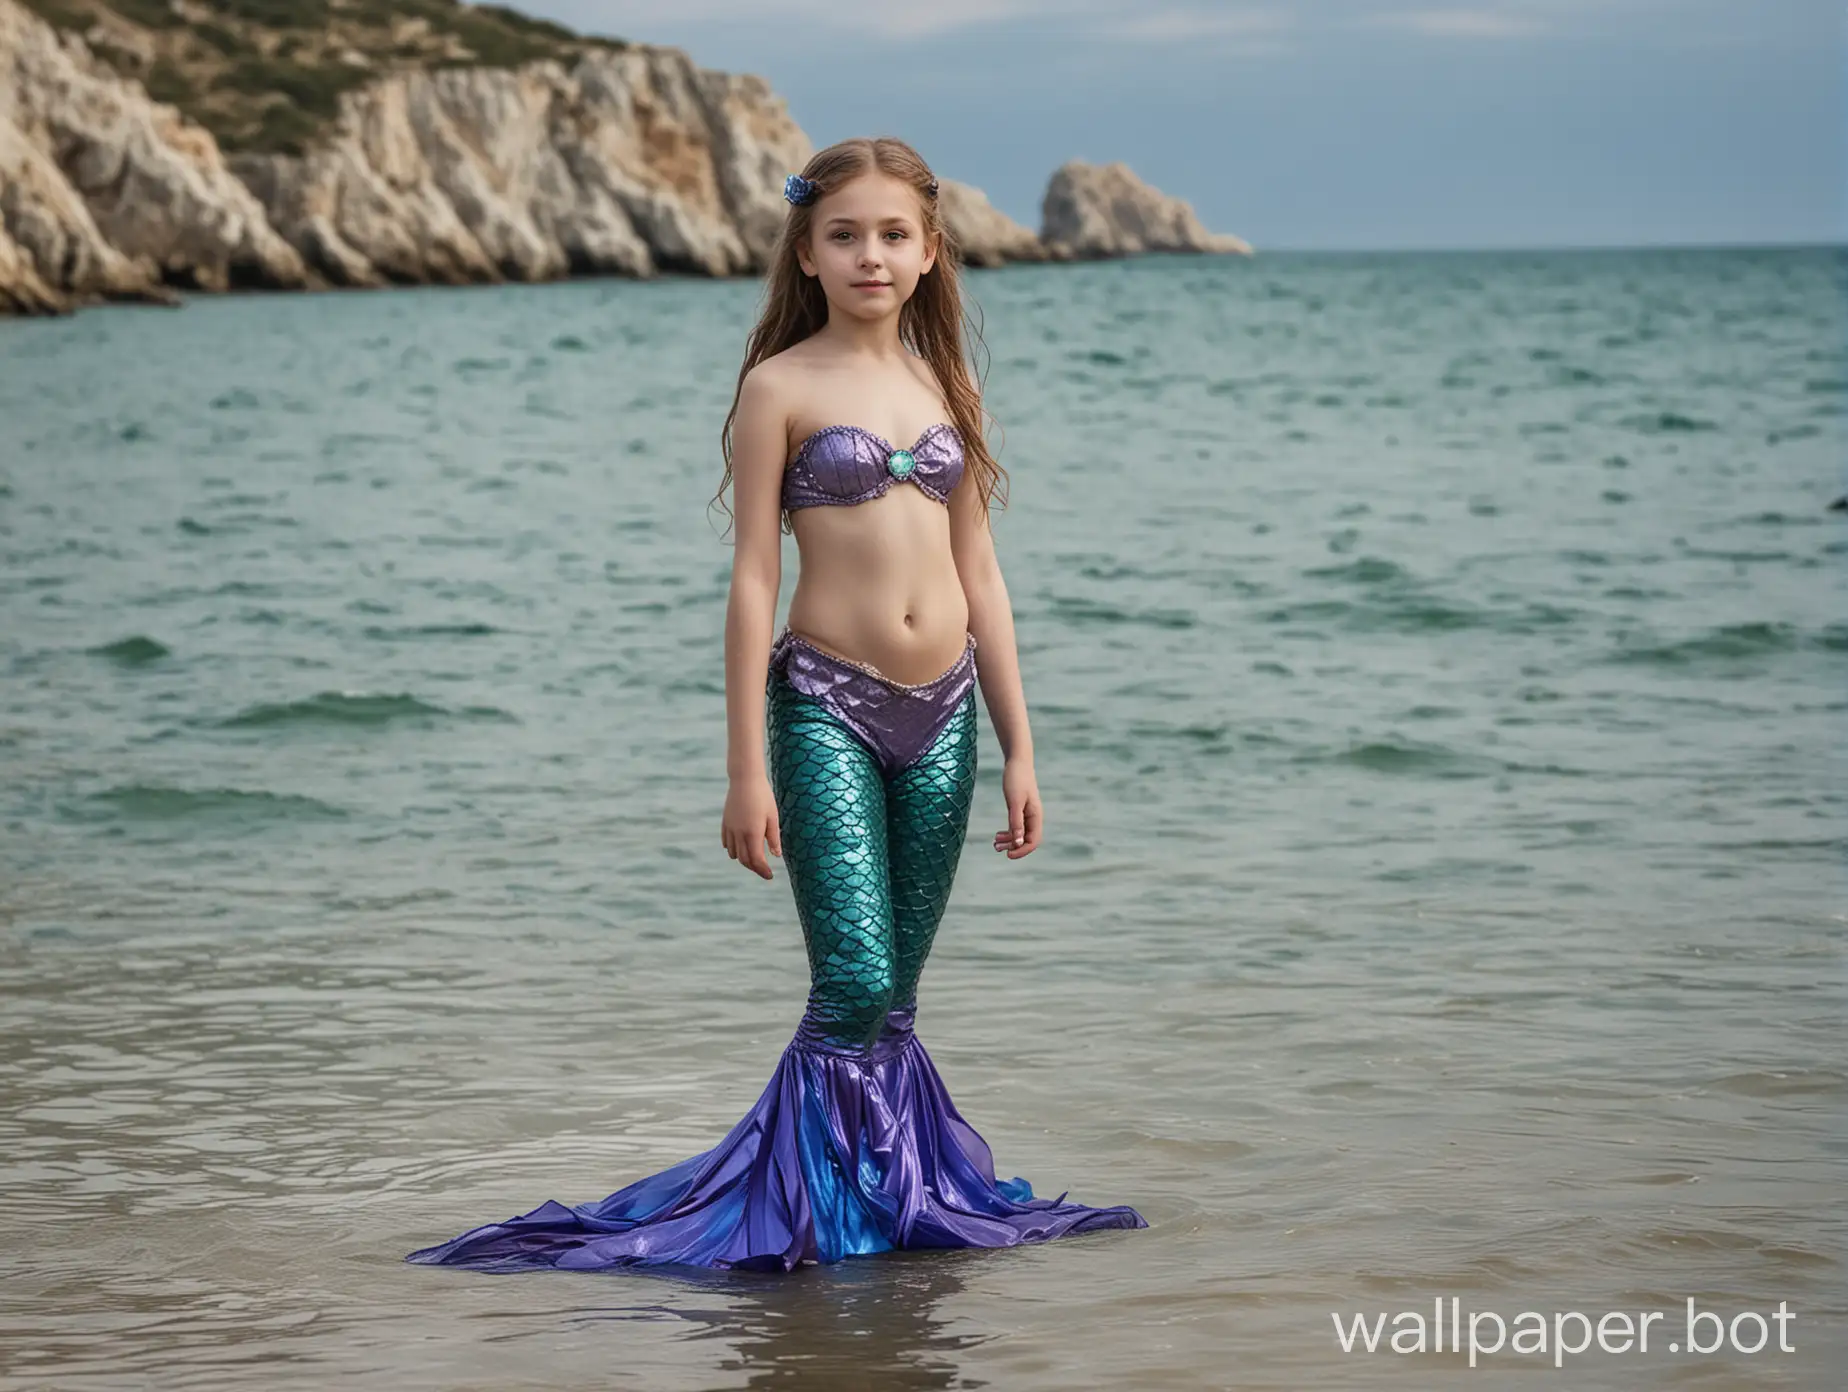 Mermaid-Cosplay-10YearOld-Girl-Enchants-with-Seaside-Fantasy